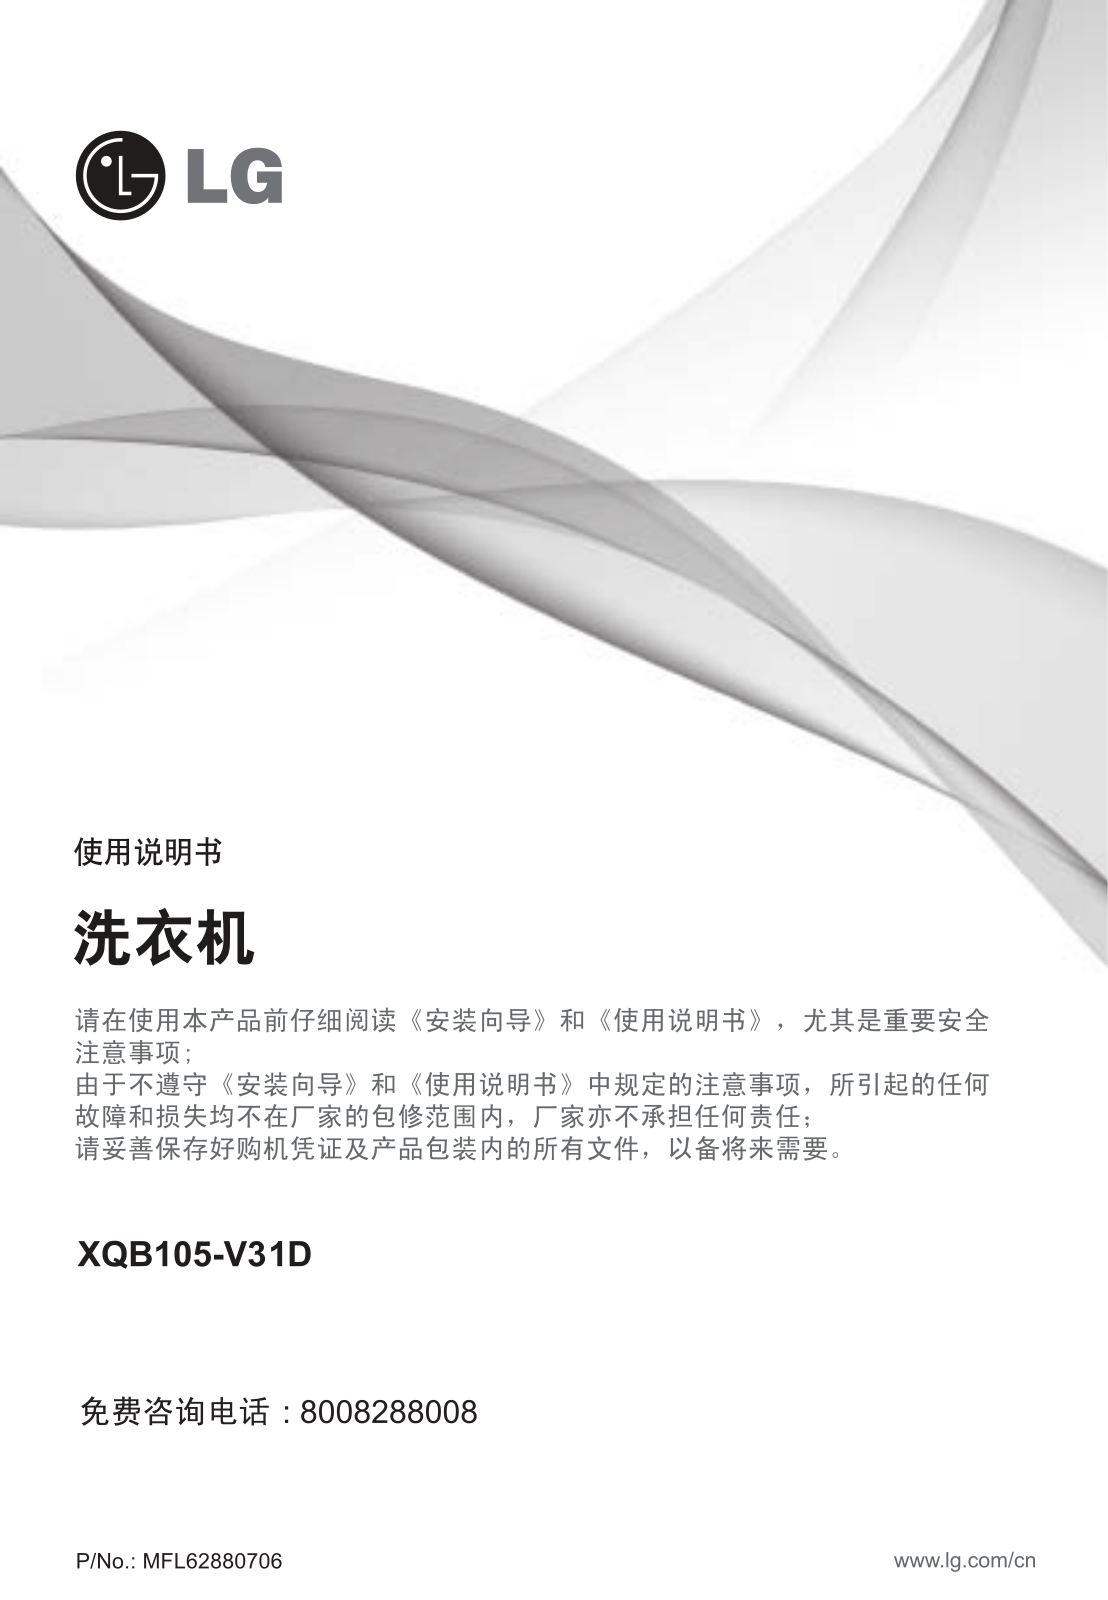 LG XQB105-V31D Users guide